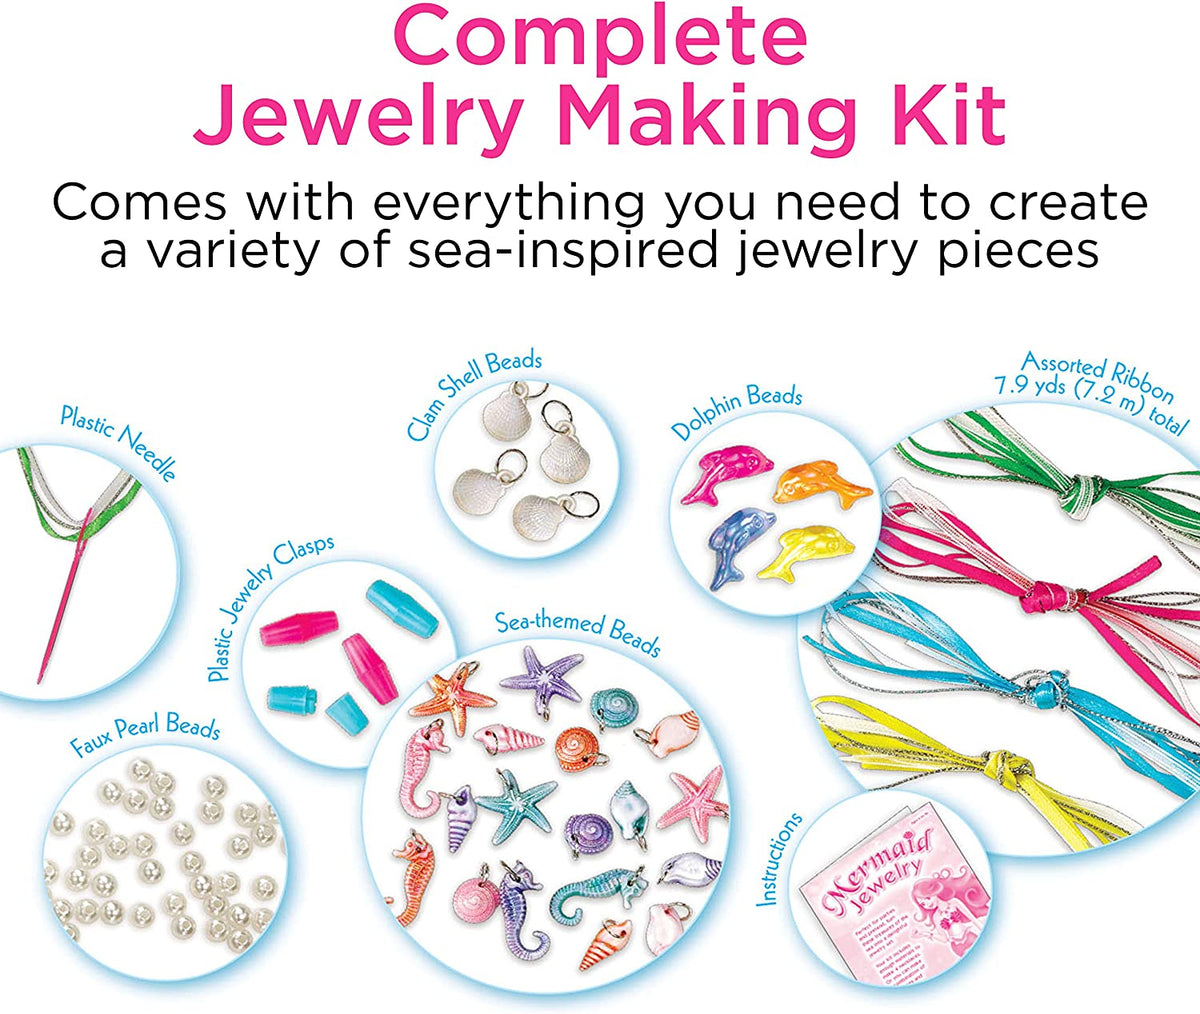 Mermaid Jewelry Kit